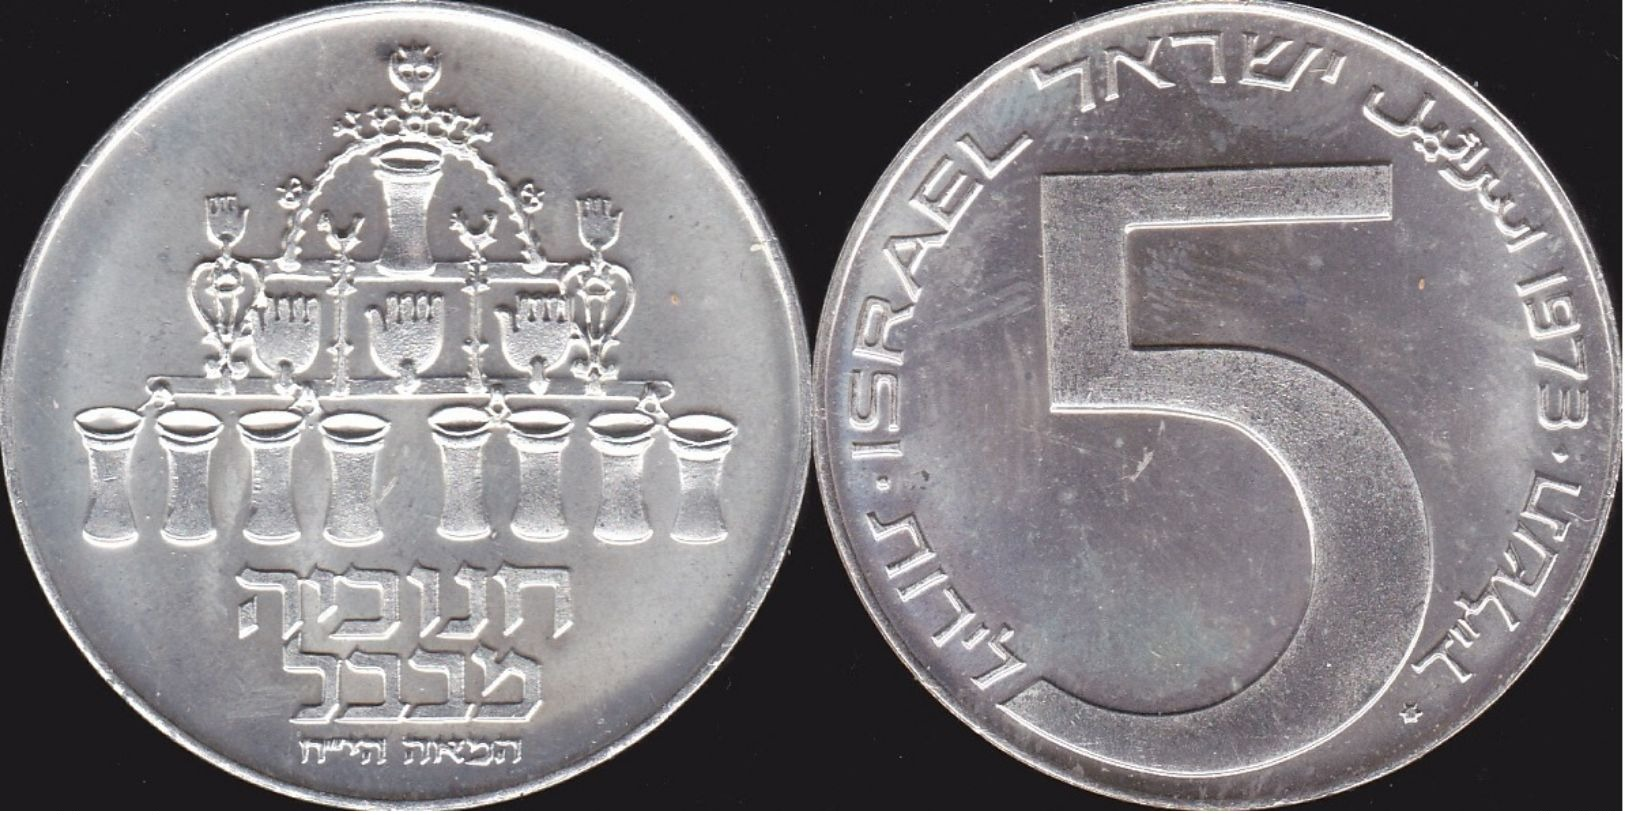 Israel, 5 Lirot 1973 - Argent /silver - Israel